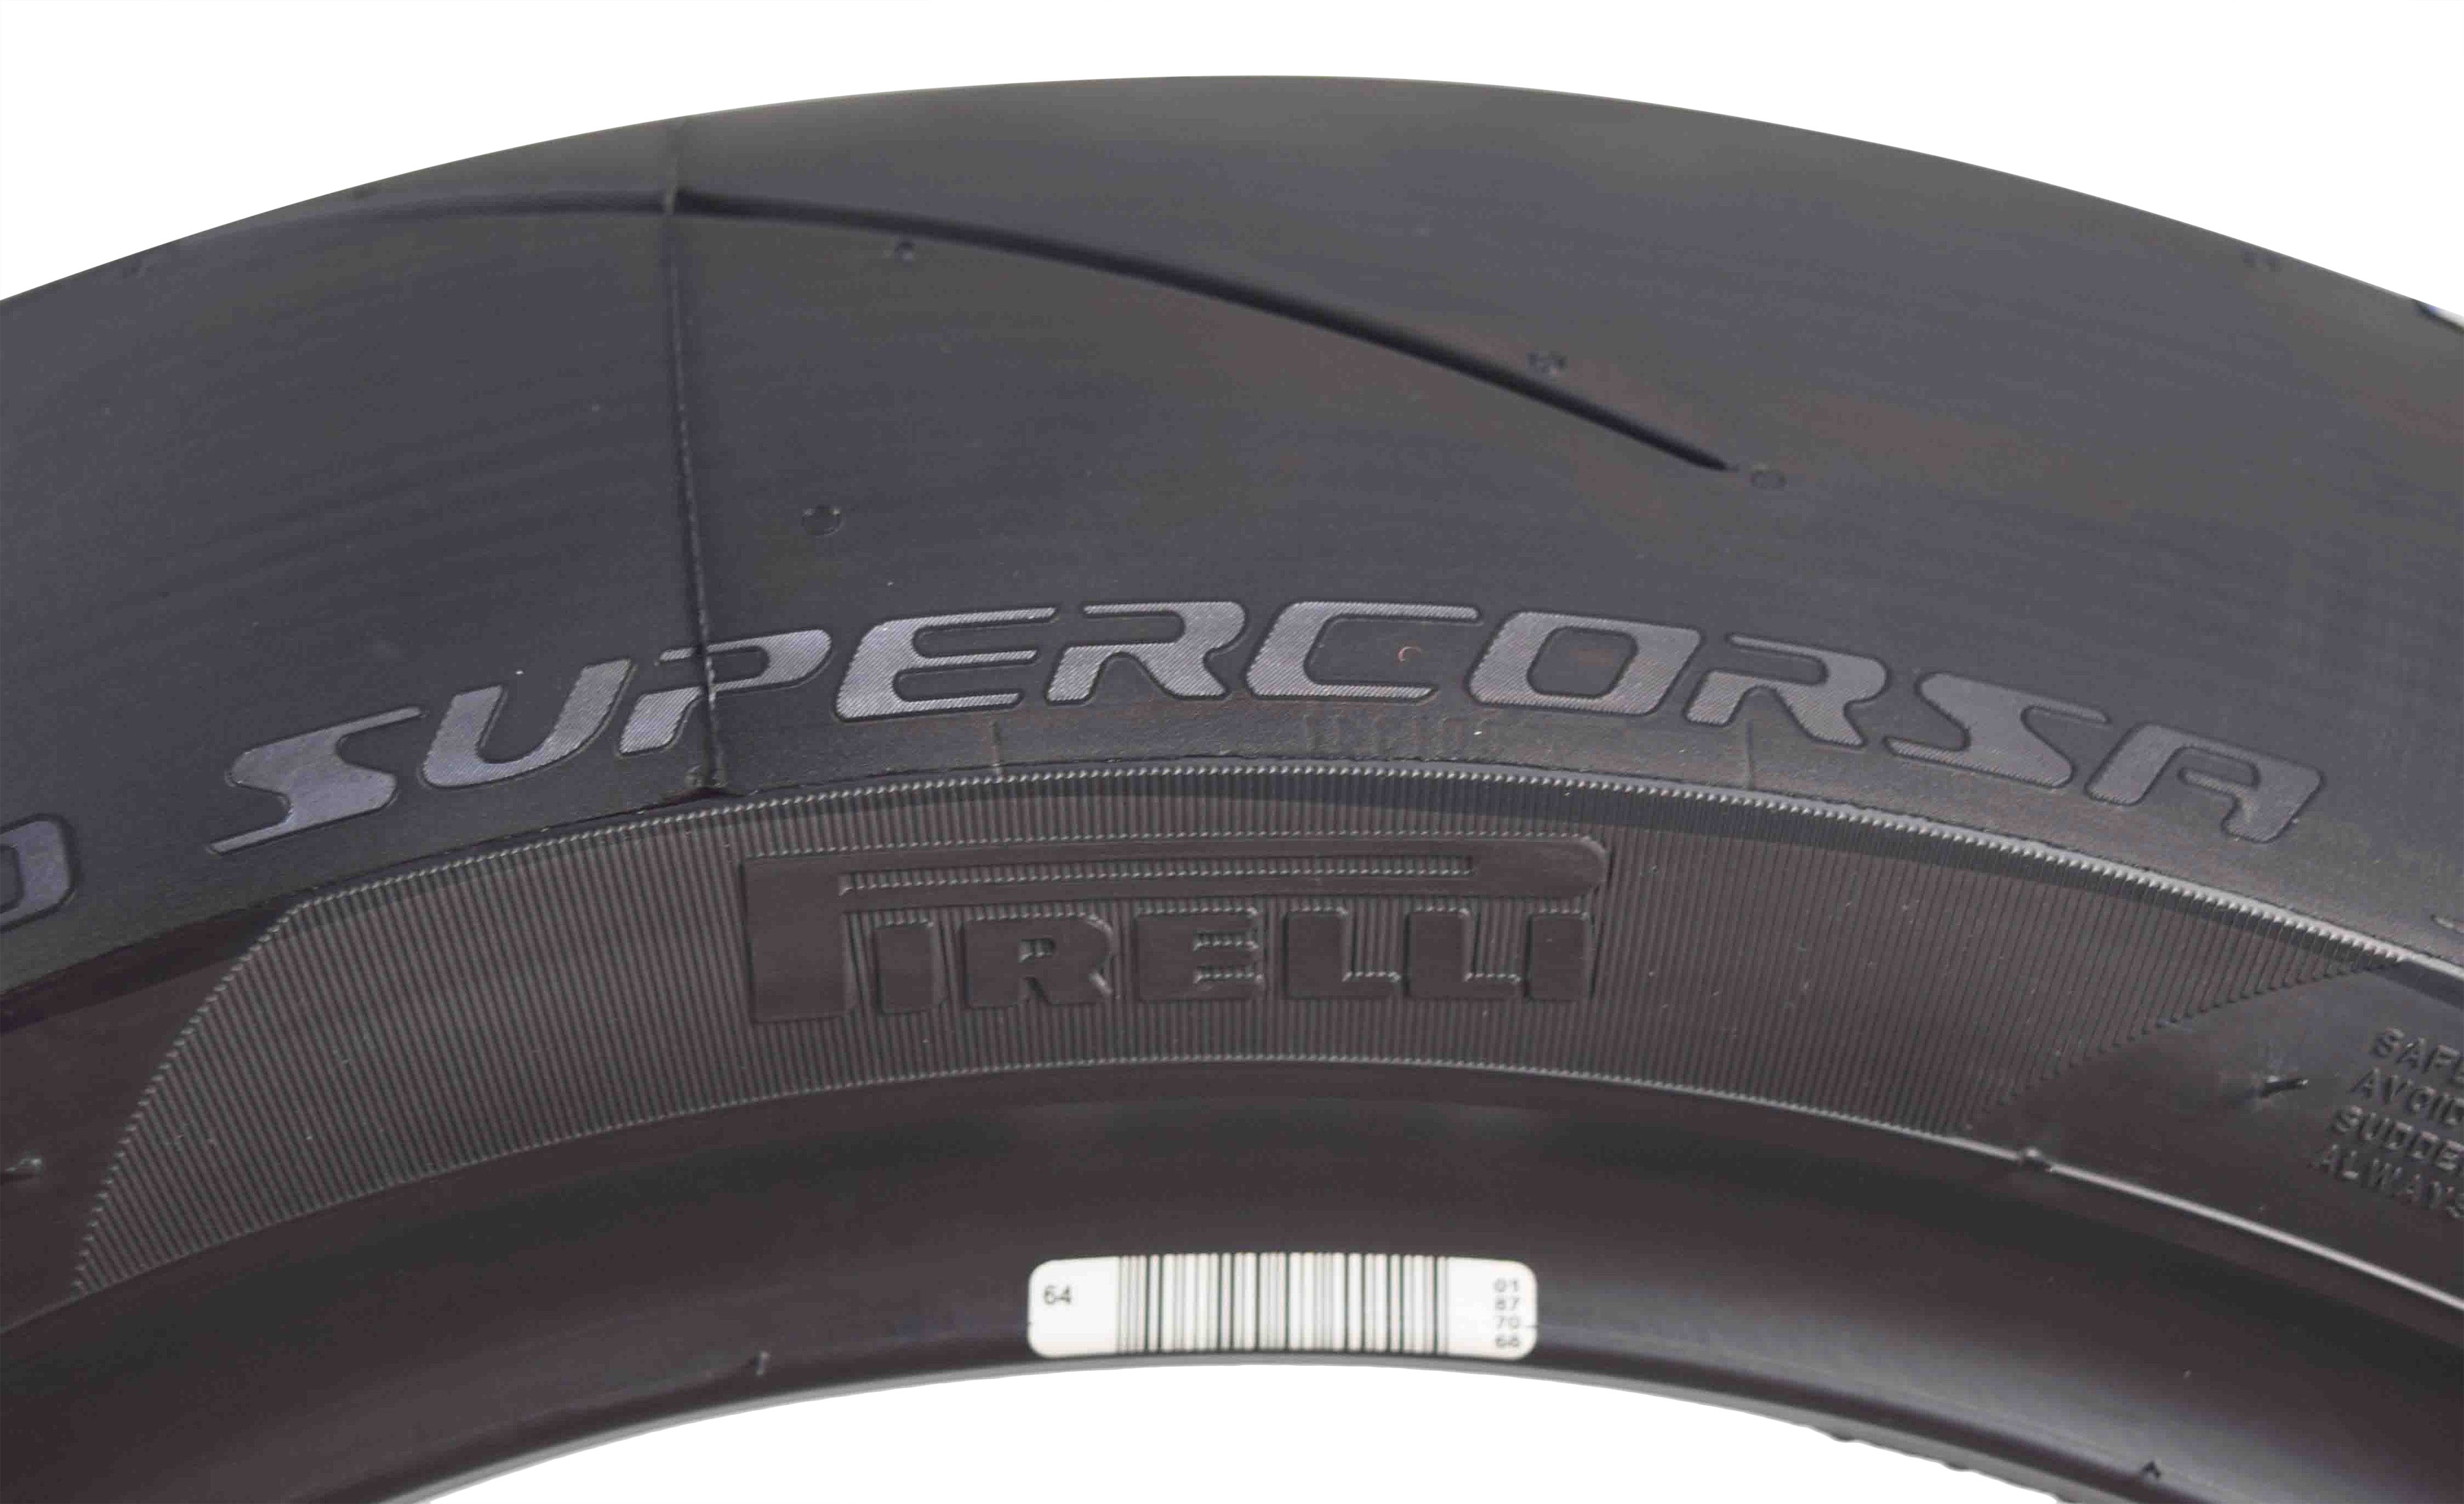 Pirelli 871-1189 Single SUPER CORSA V3 200/60ZR17 Rear Motorcycle Tire